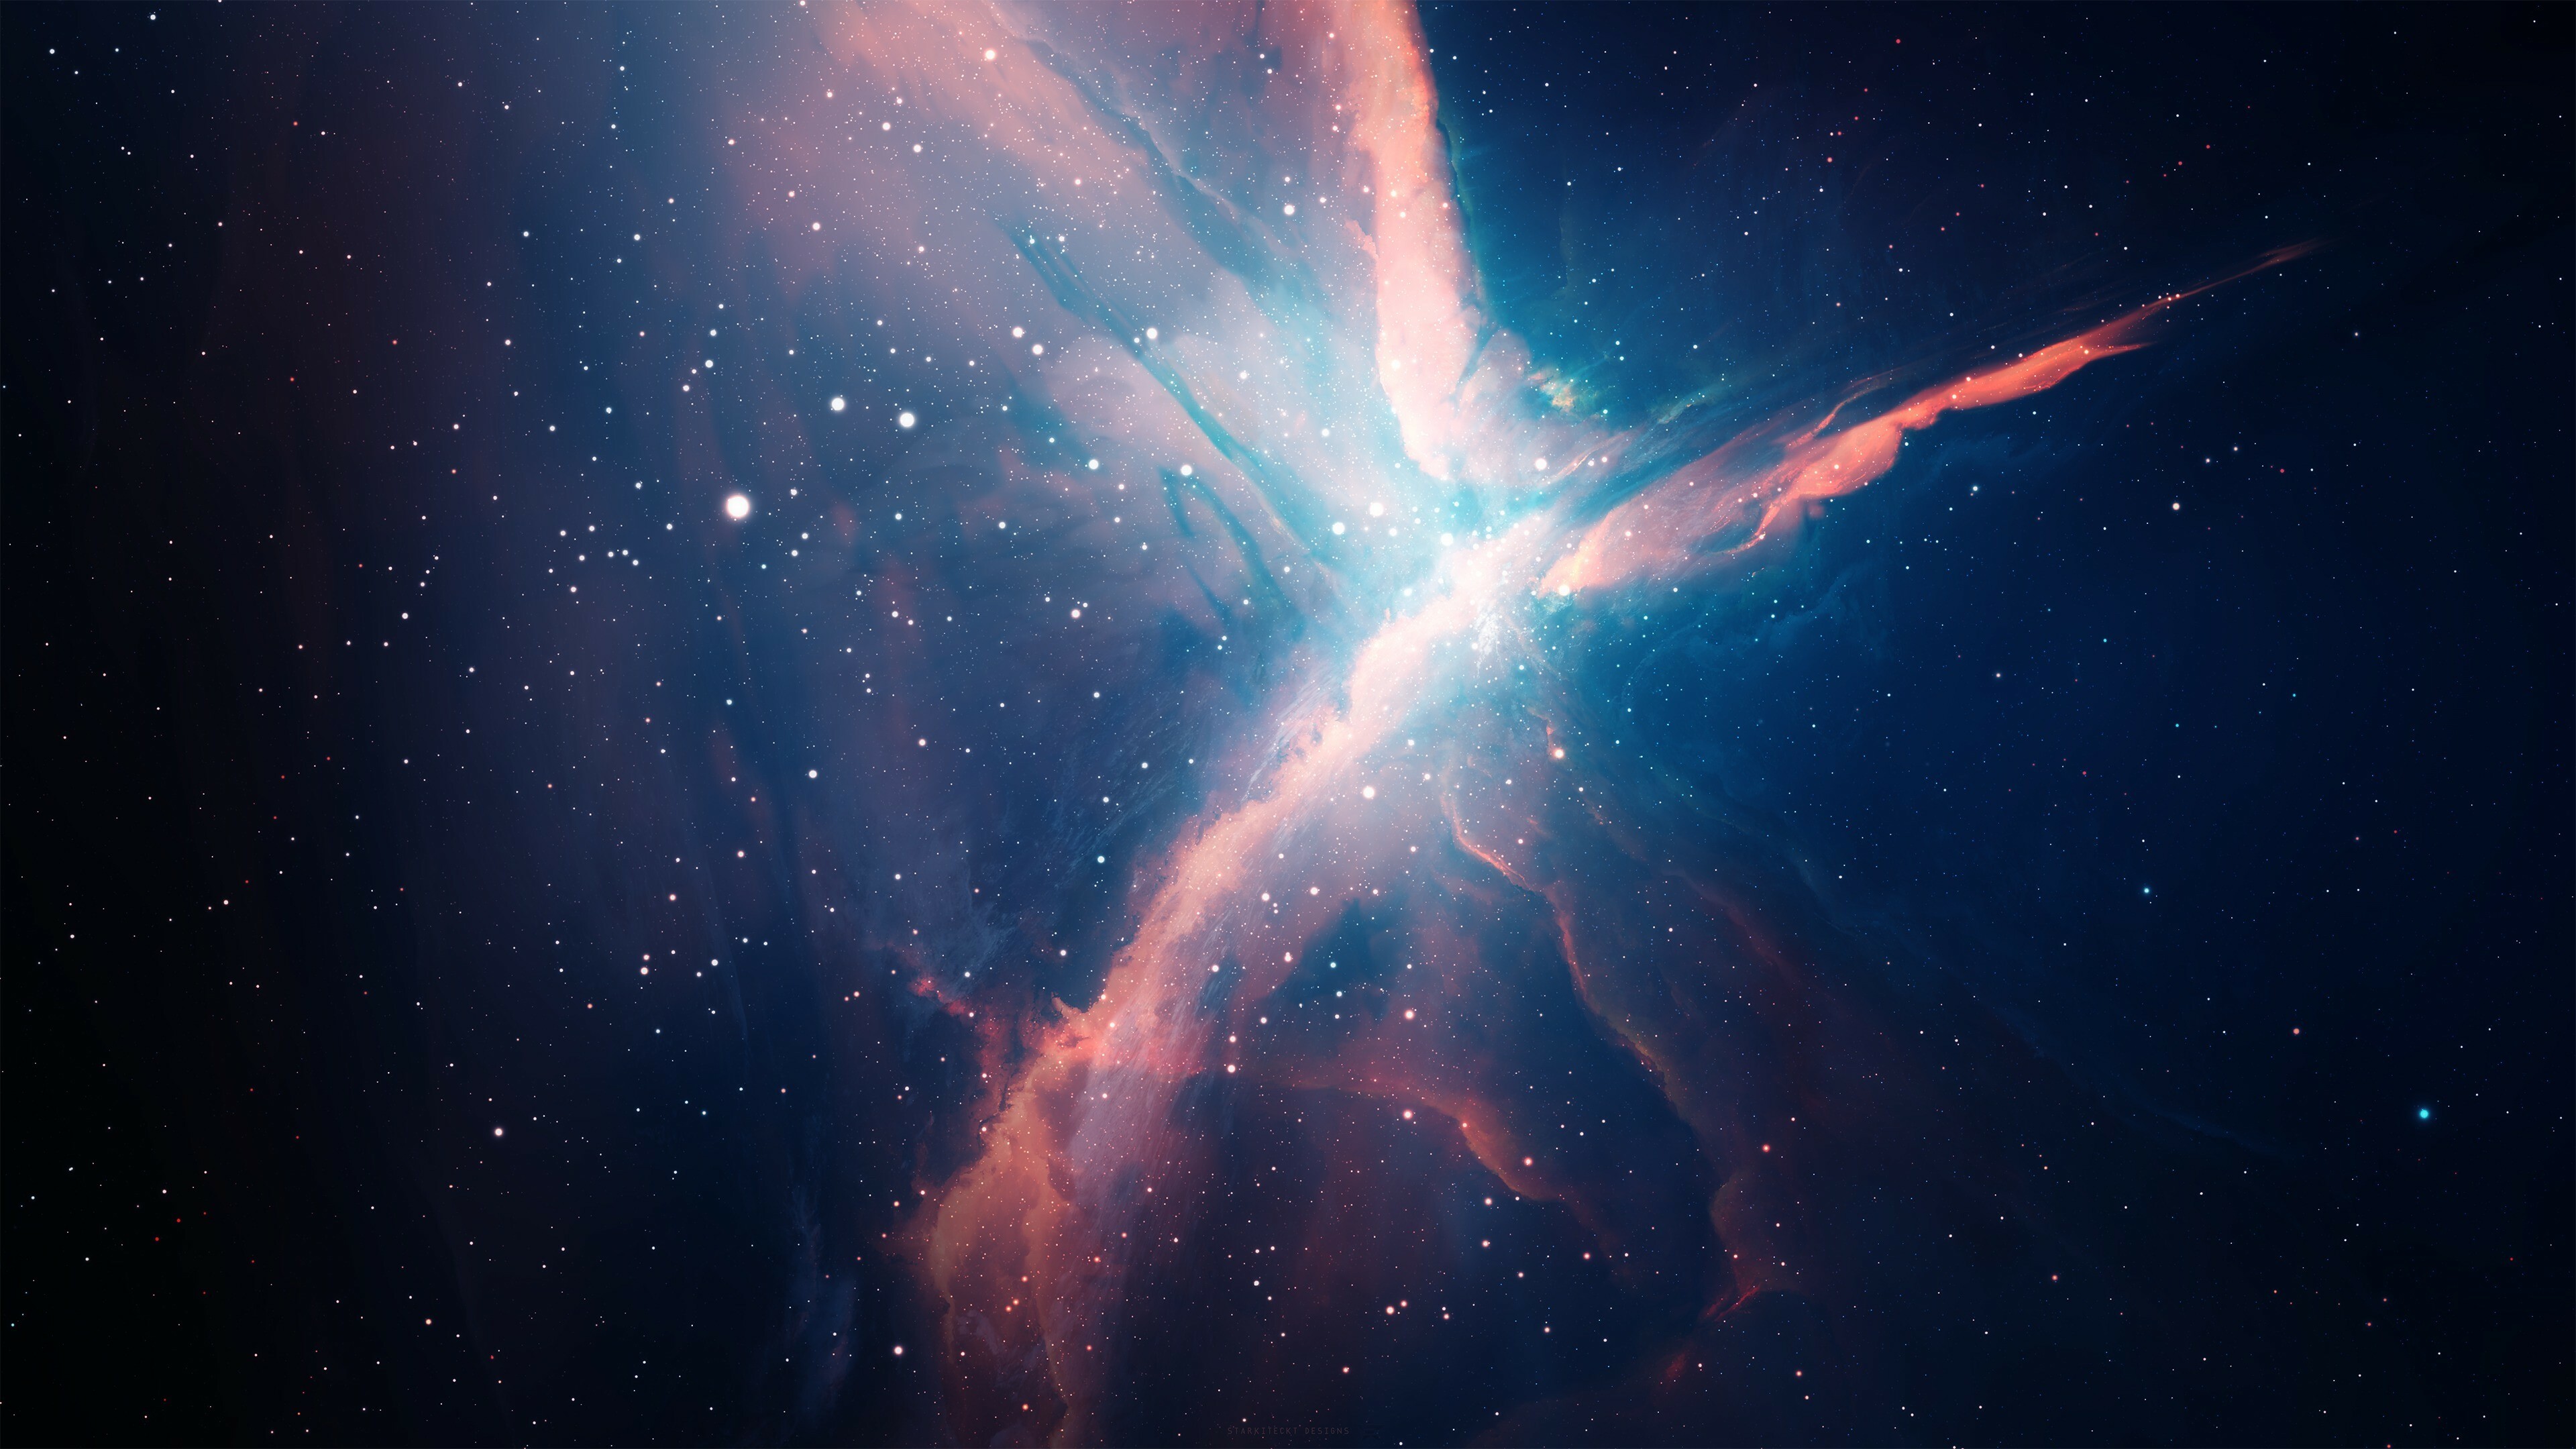 Outer Space: The interstellar medium, Intergalactic void, Nebula. 3840x2160 4K Wallpaper.